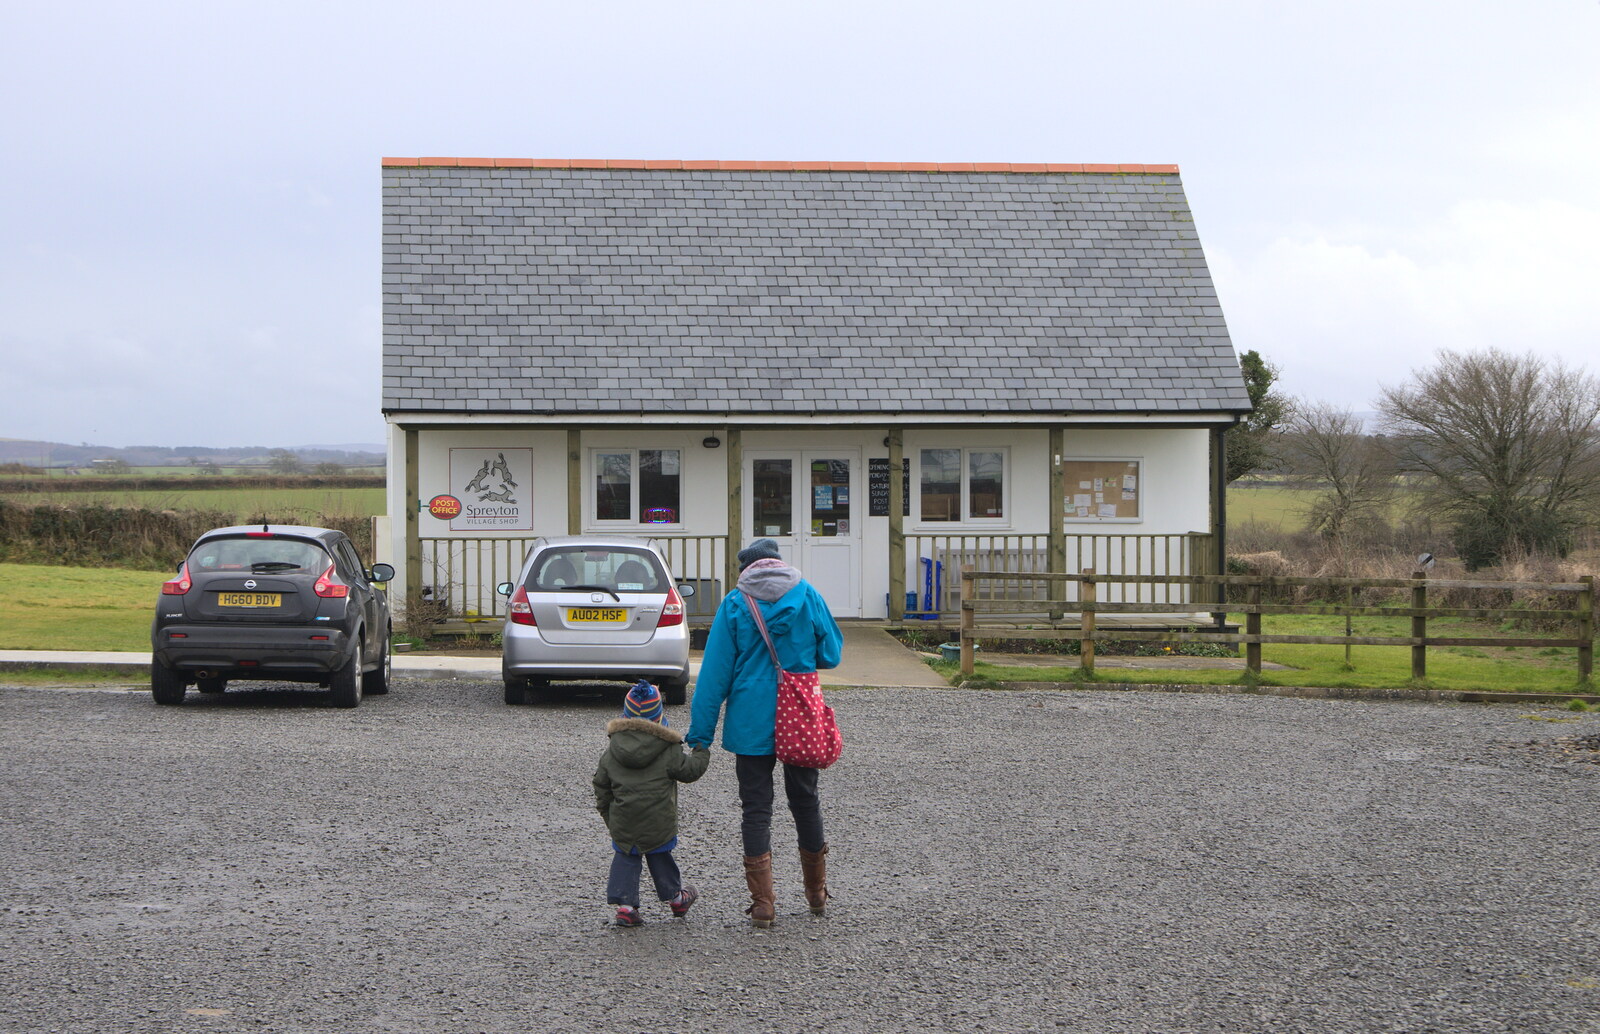 The Spreyton Village Shop from A Trip to Grandma J's, Spreyton, Devon - 18th February 2015